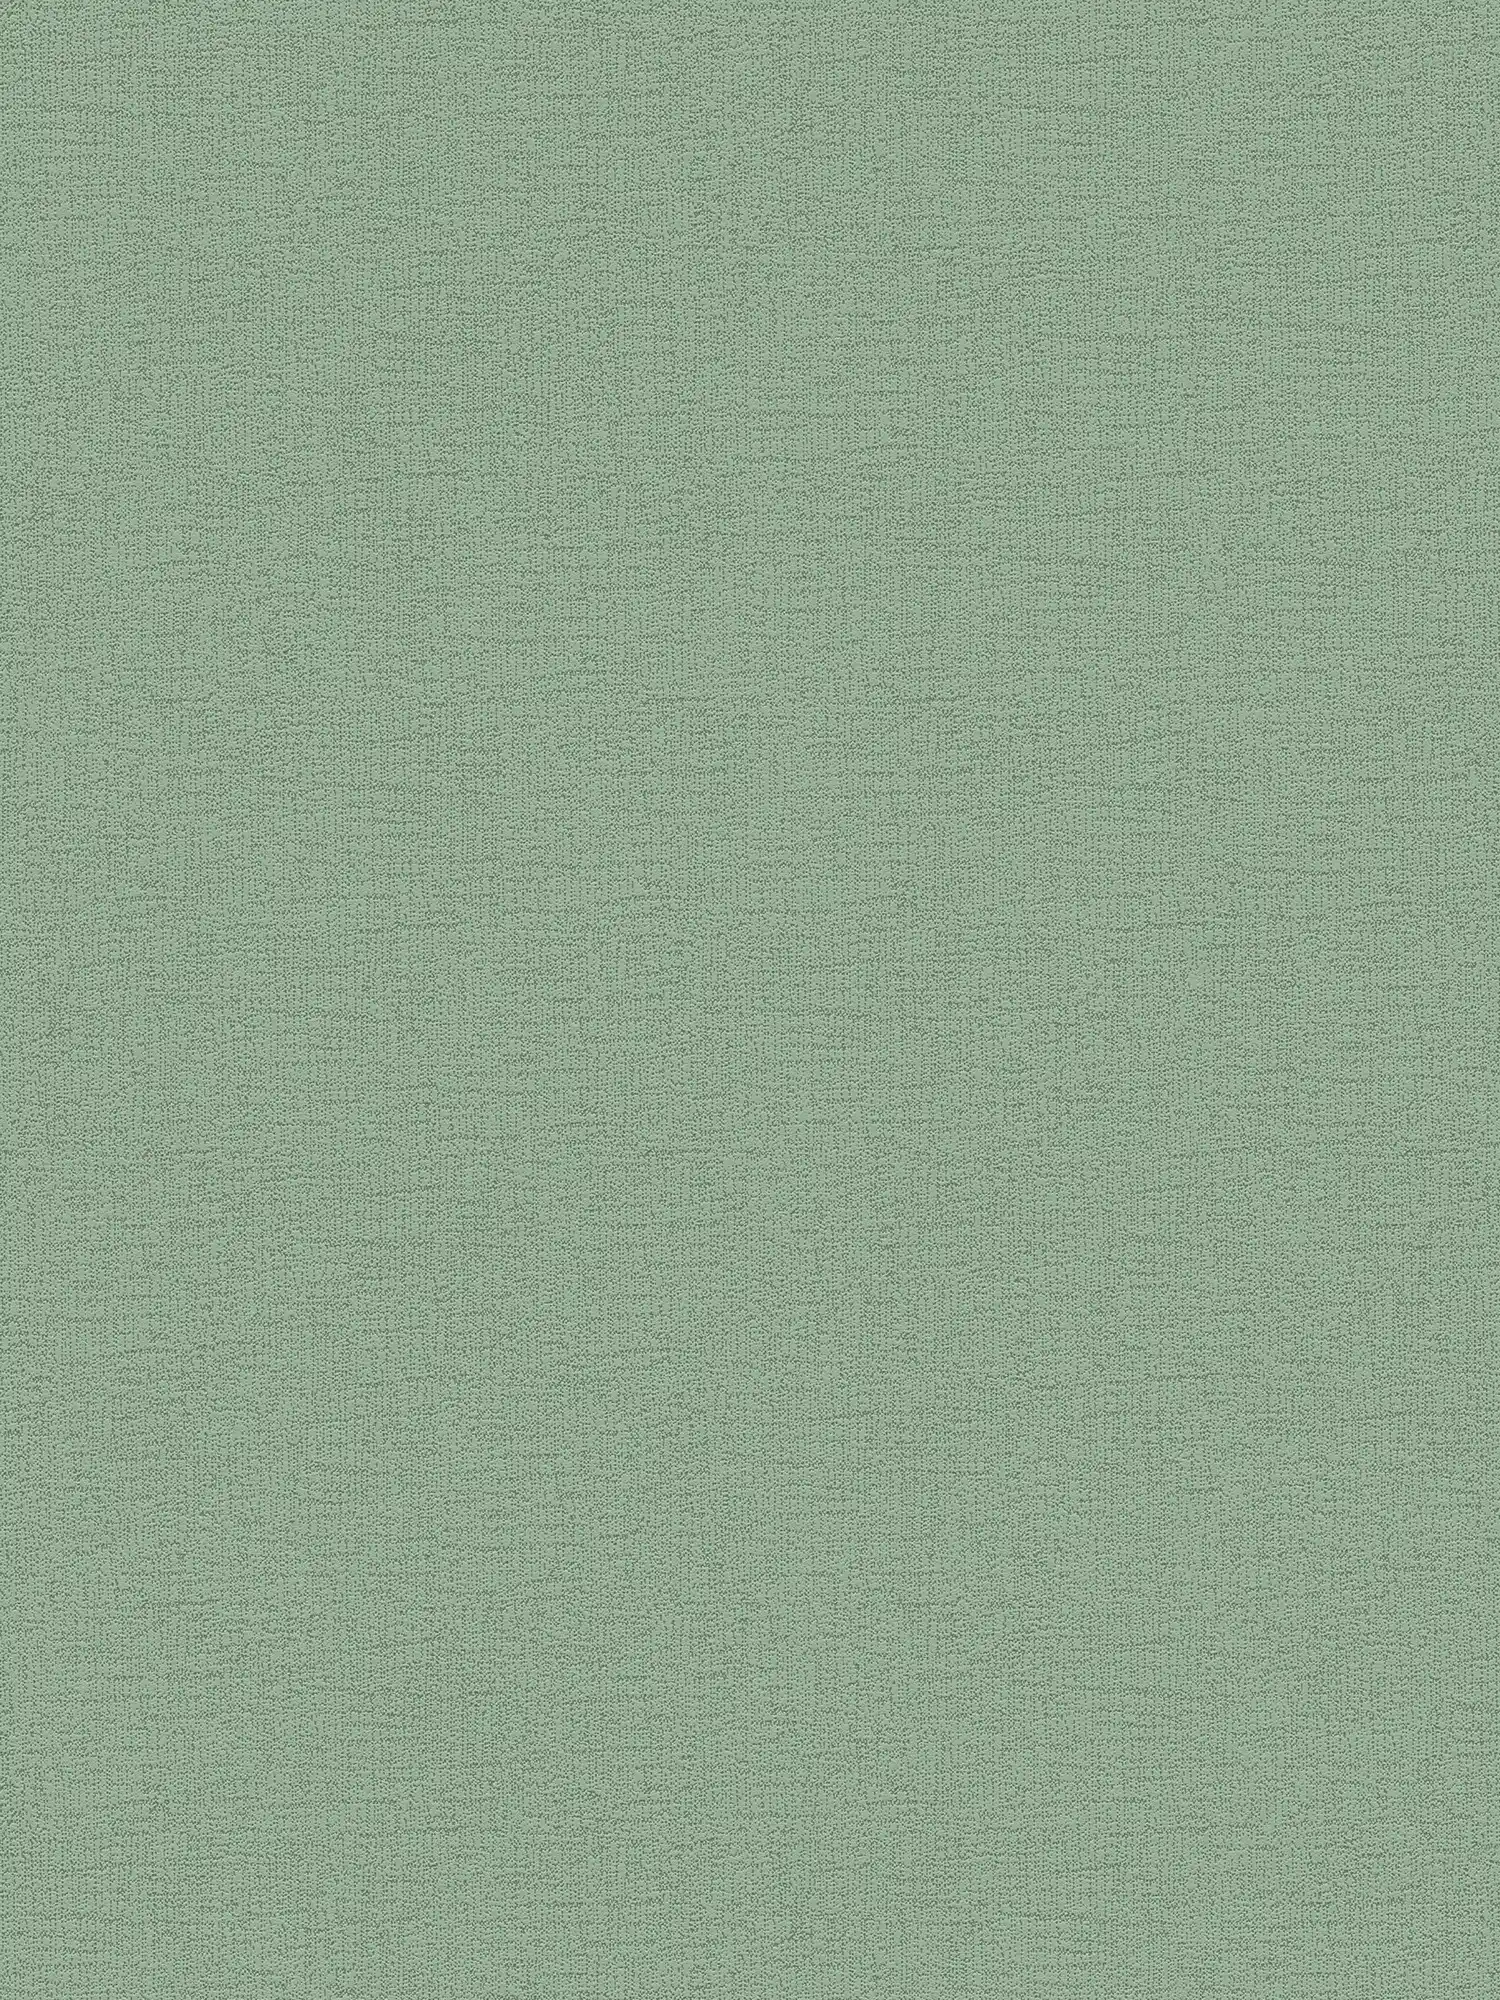 Carta da parati in tessuto non tessuto tinta unita verde muschio con motivo strutturato - verde
